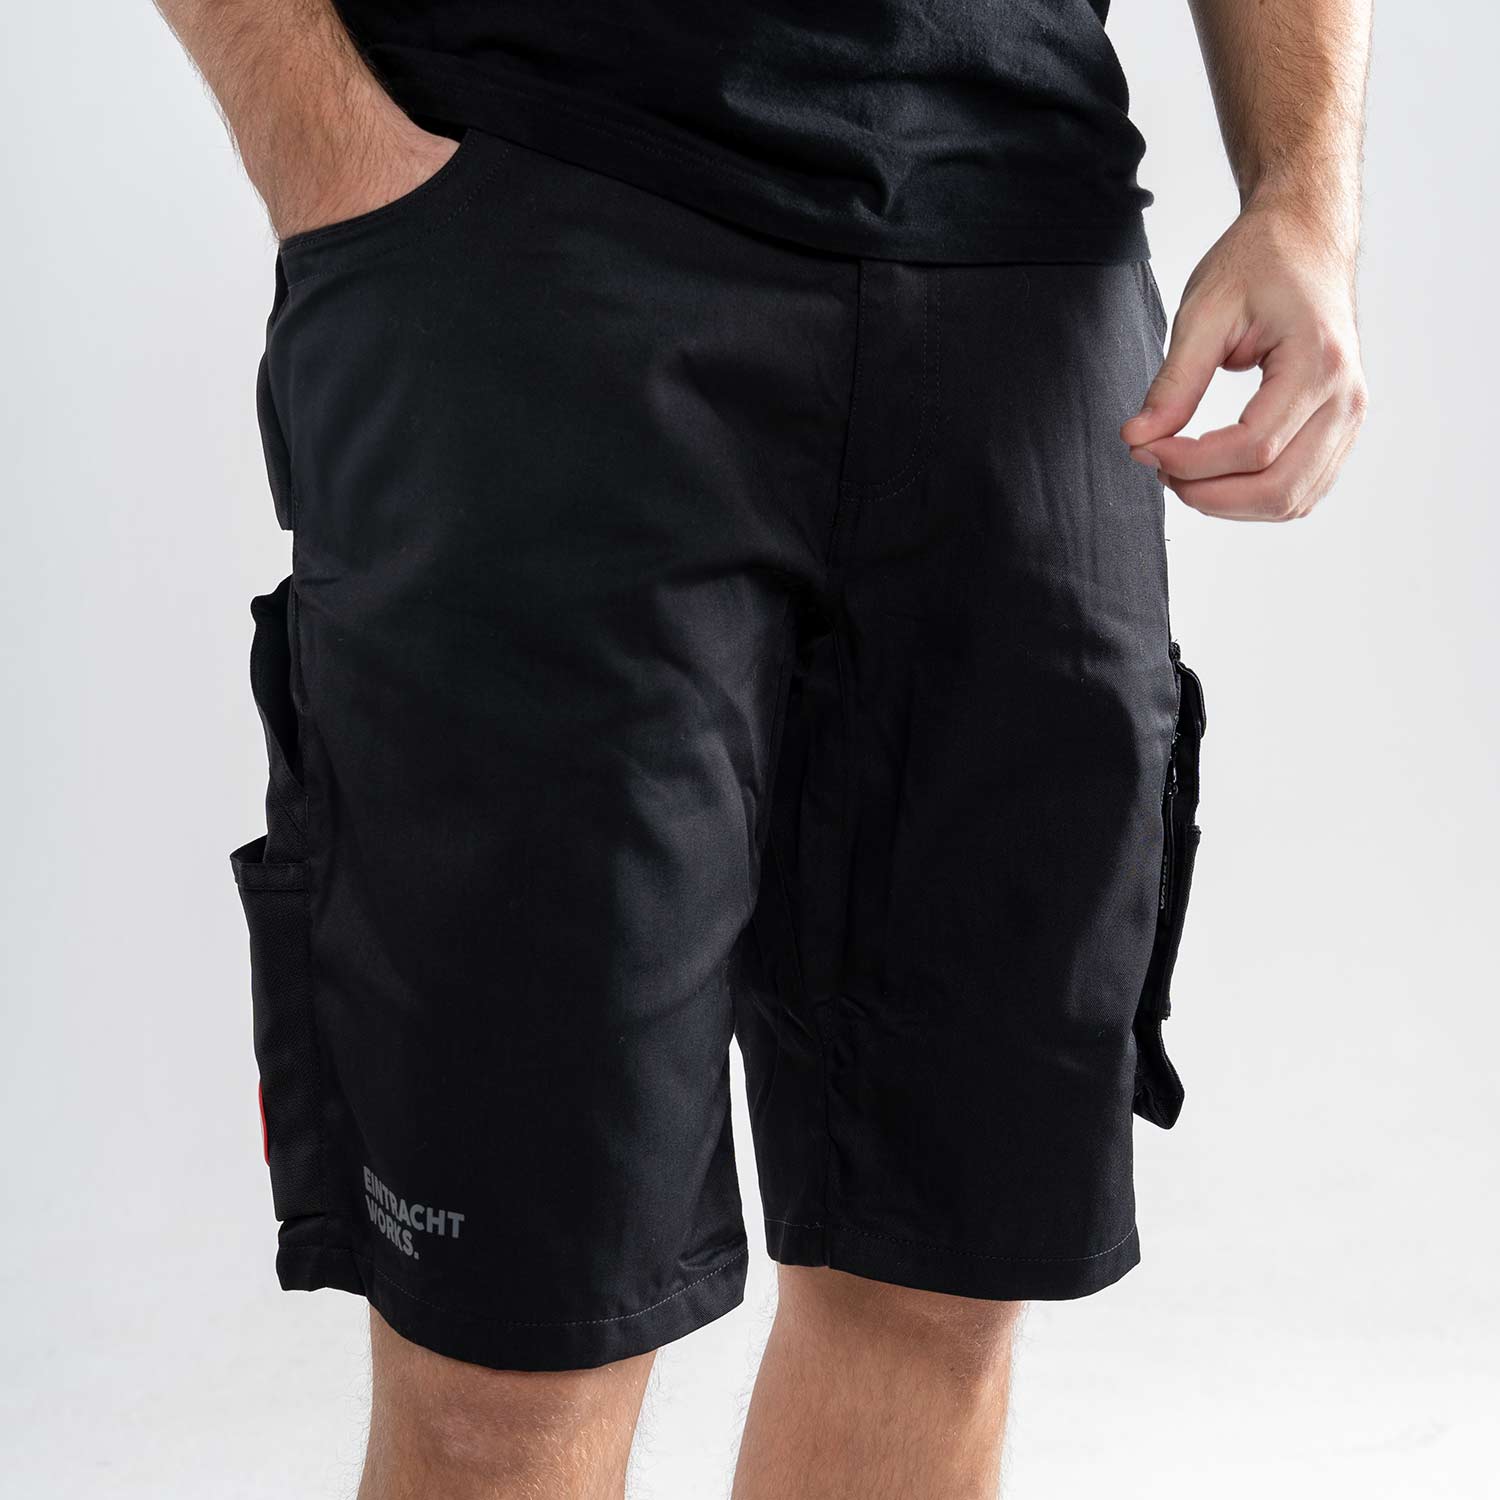 Bild 6: Workwear Pants Short Black